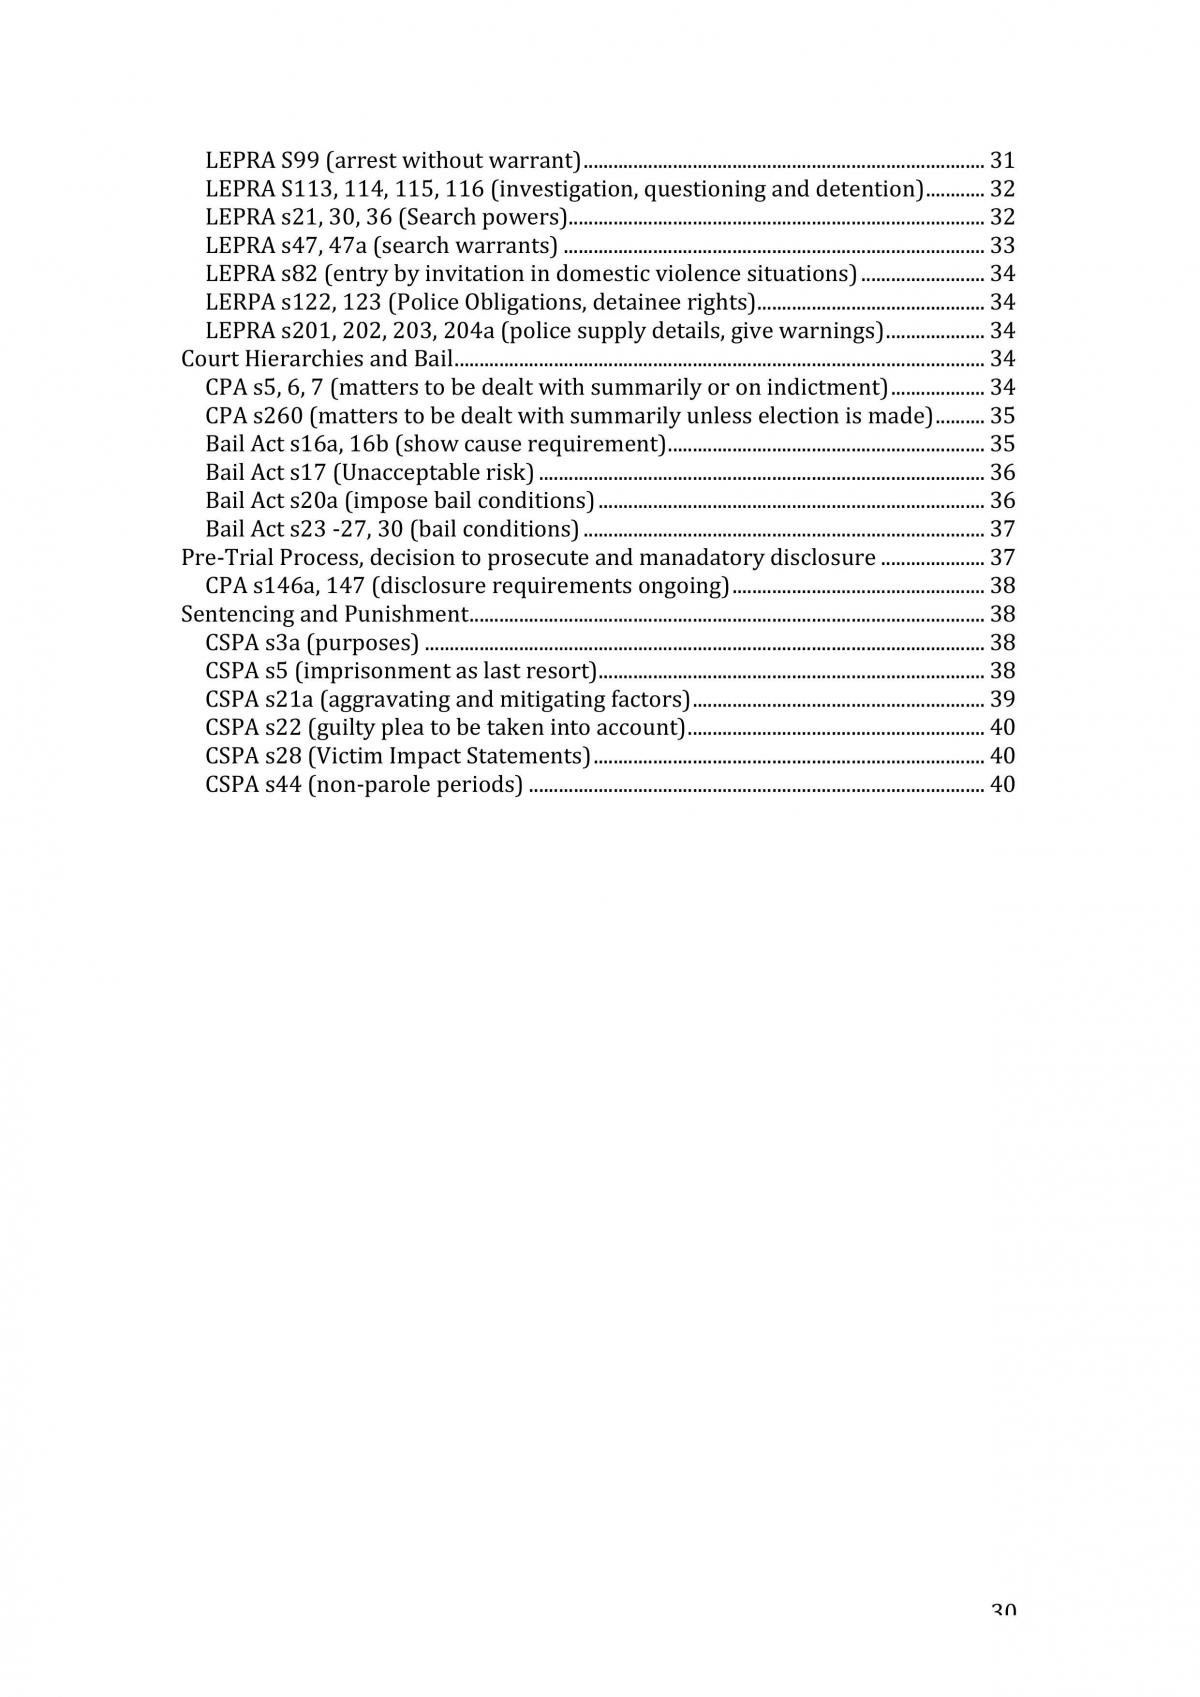 Complete Criminal Procedures Notes - Page 30